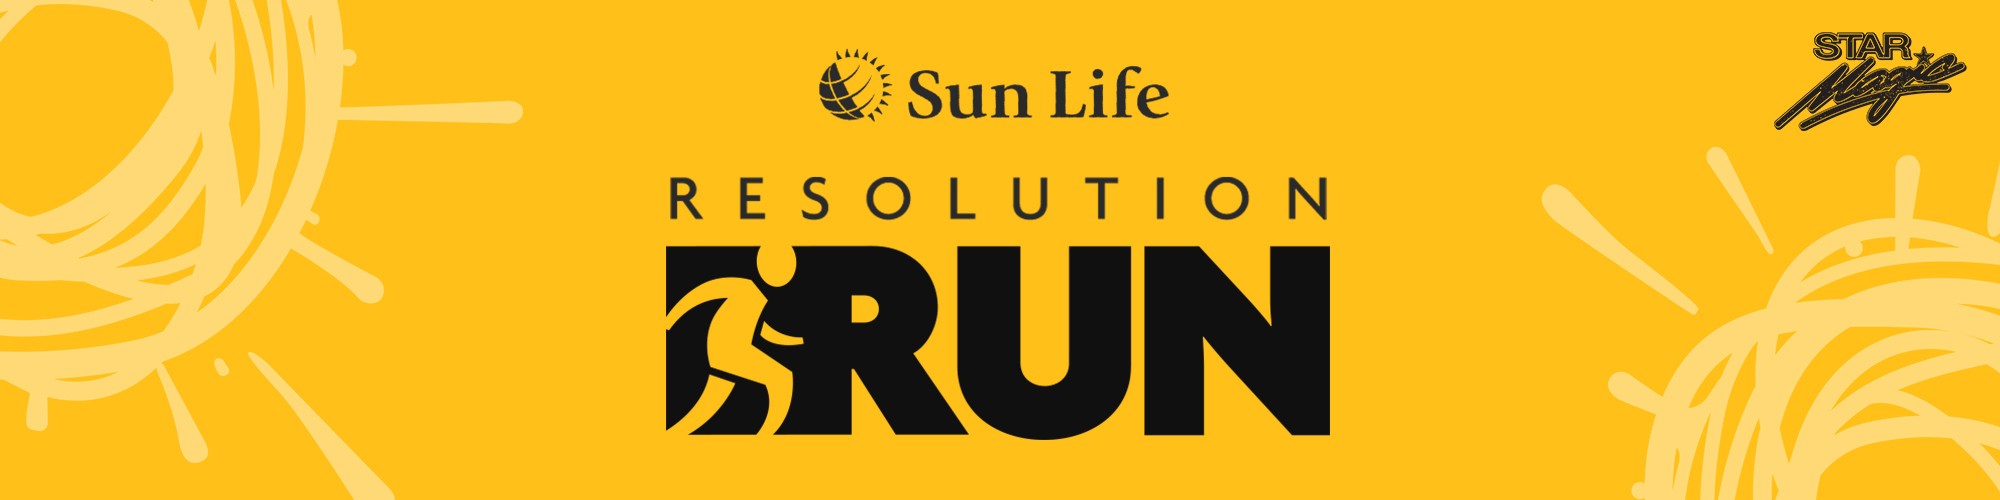 Sunlife Resolution Run